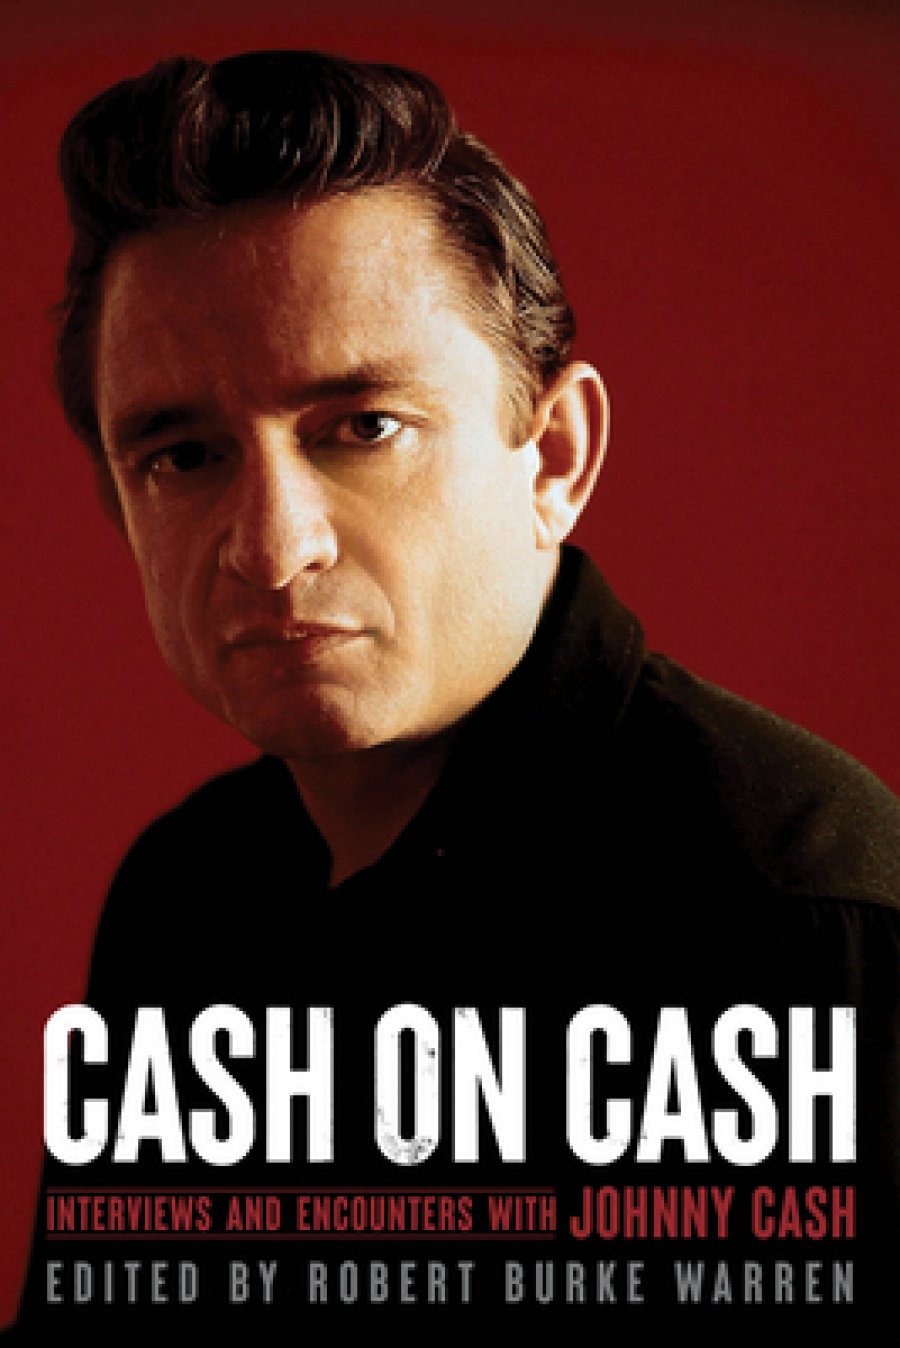 Robert Burke Warren will discuss his new book “Cash on Cash” with  Chuck “Rochmon Record Club” Vosganian at Northshire Bookstore.  